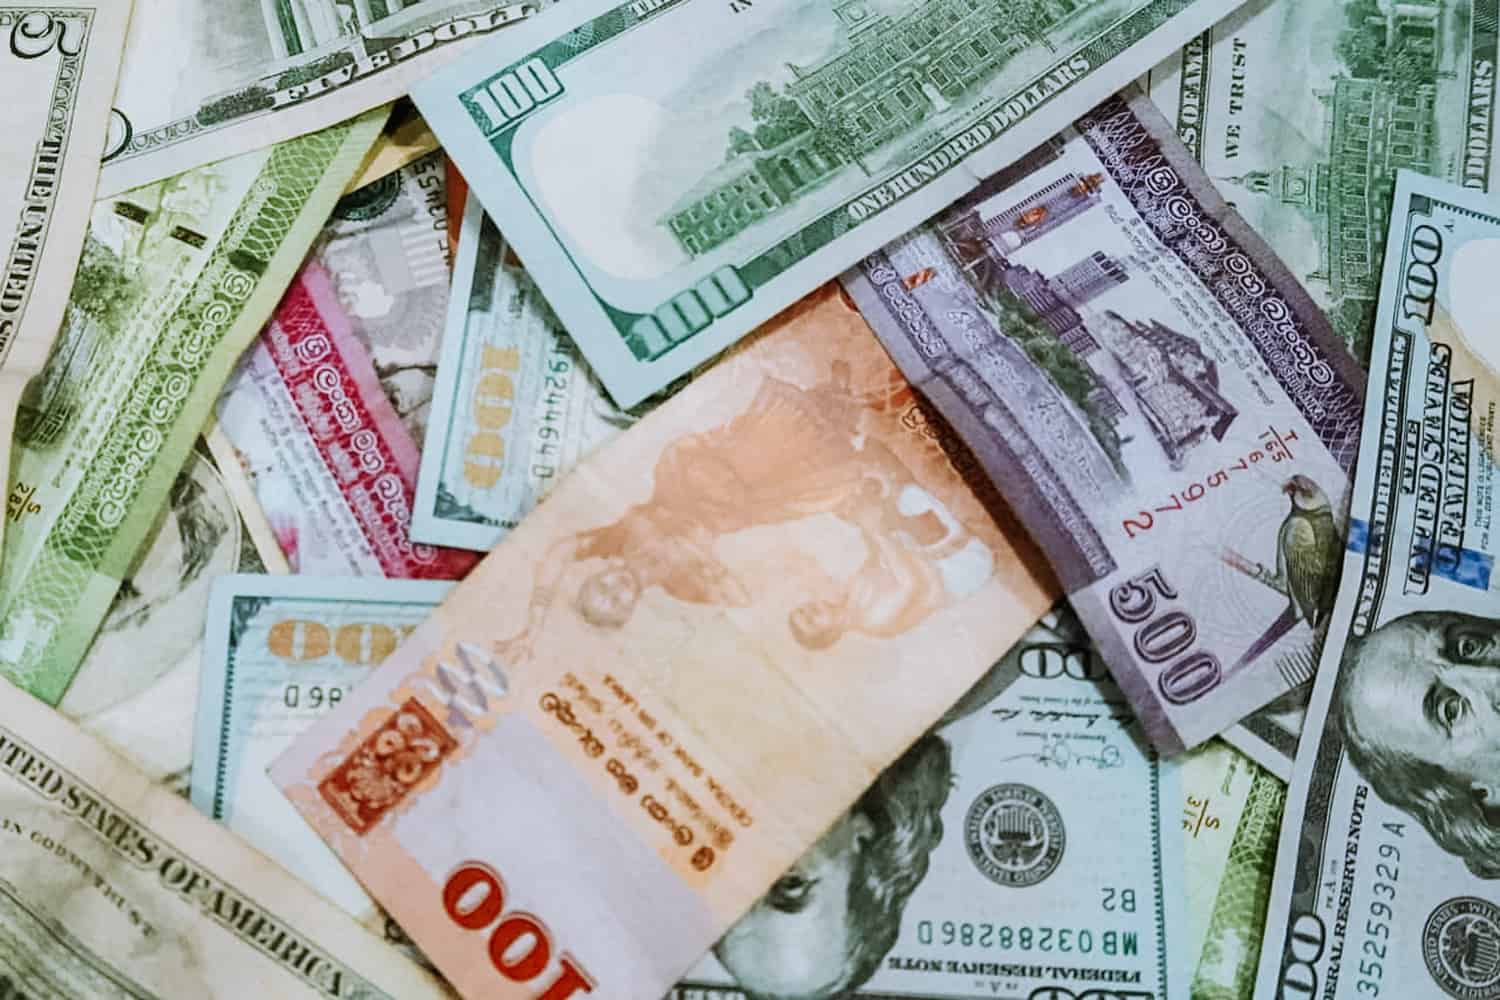 where to exchange money in Sri Lanka